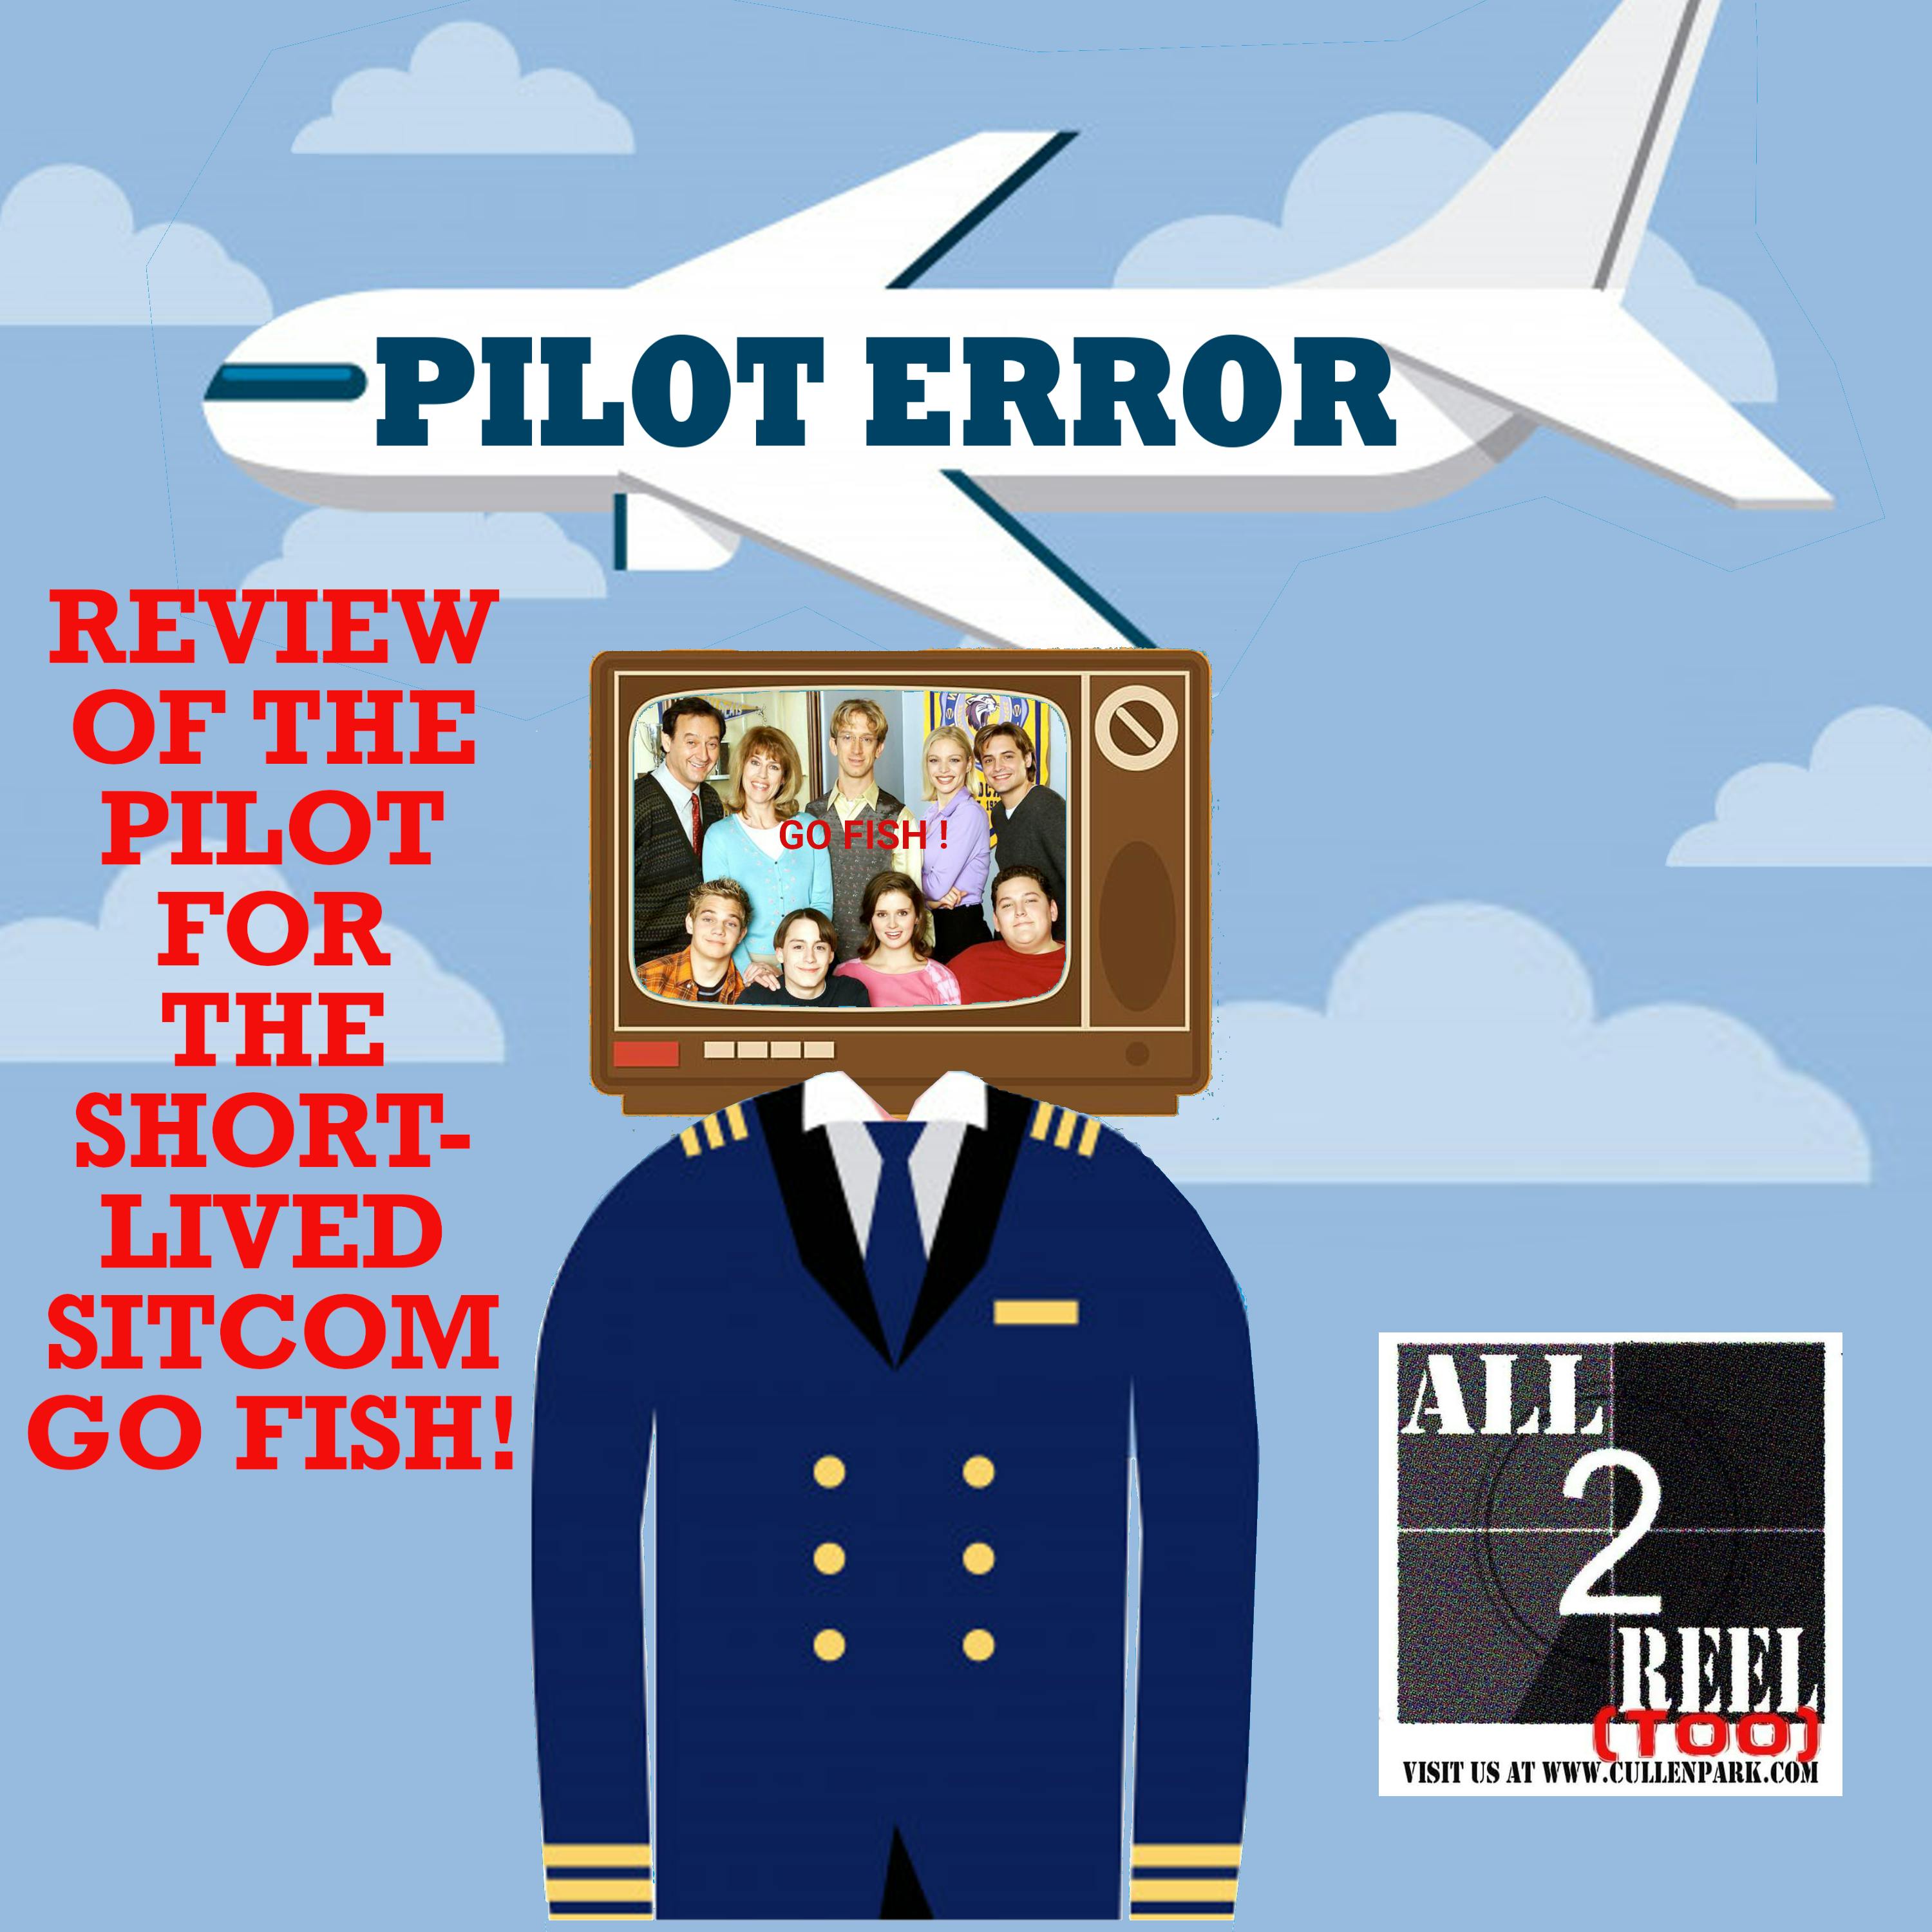 Go Fish (2001) - PILOT ERROR REVIEW